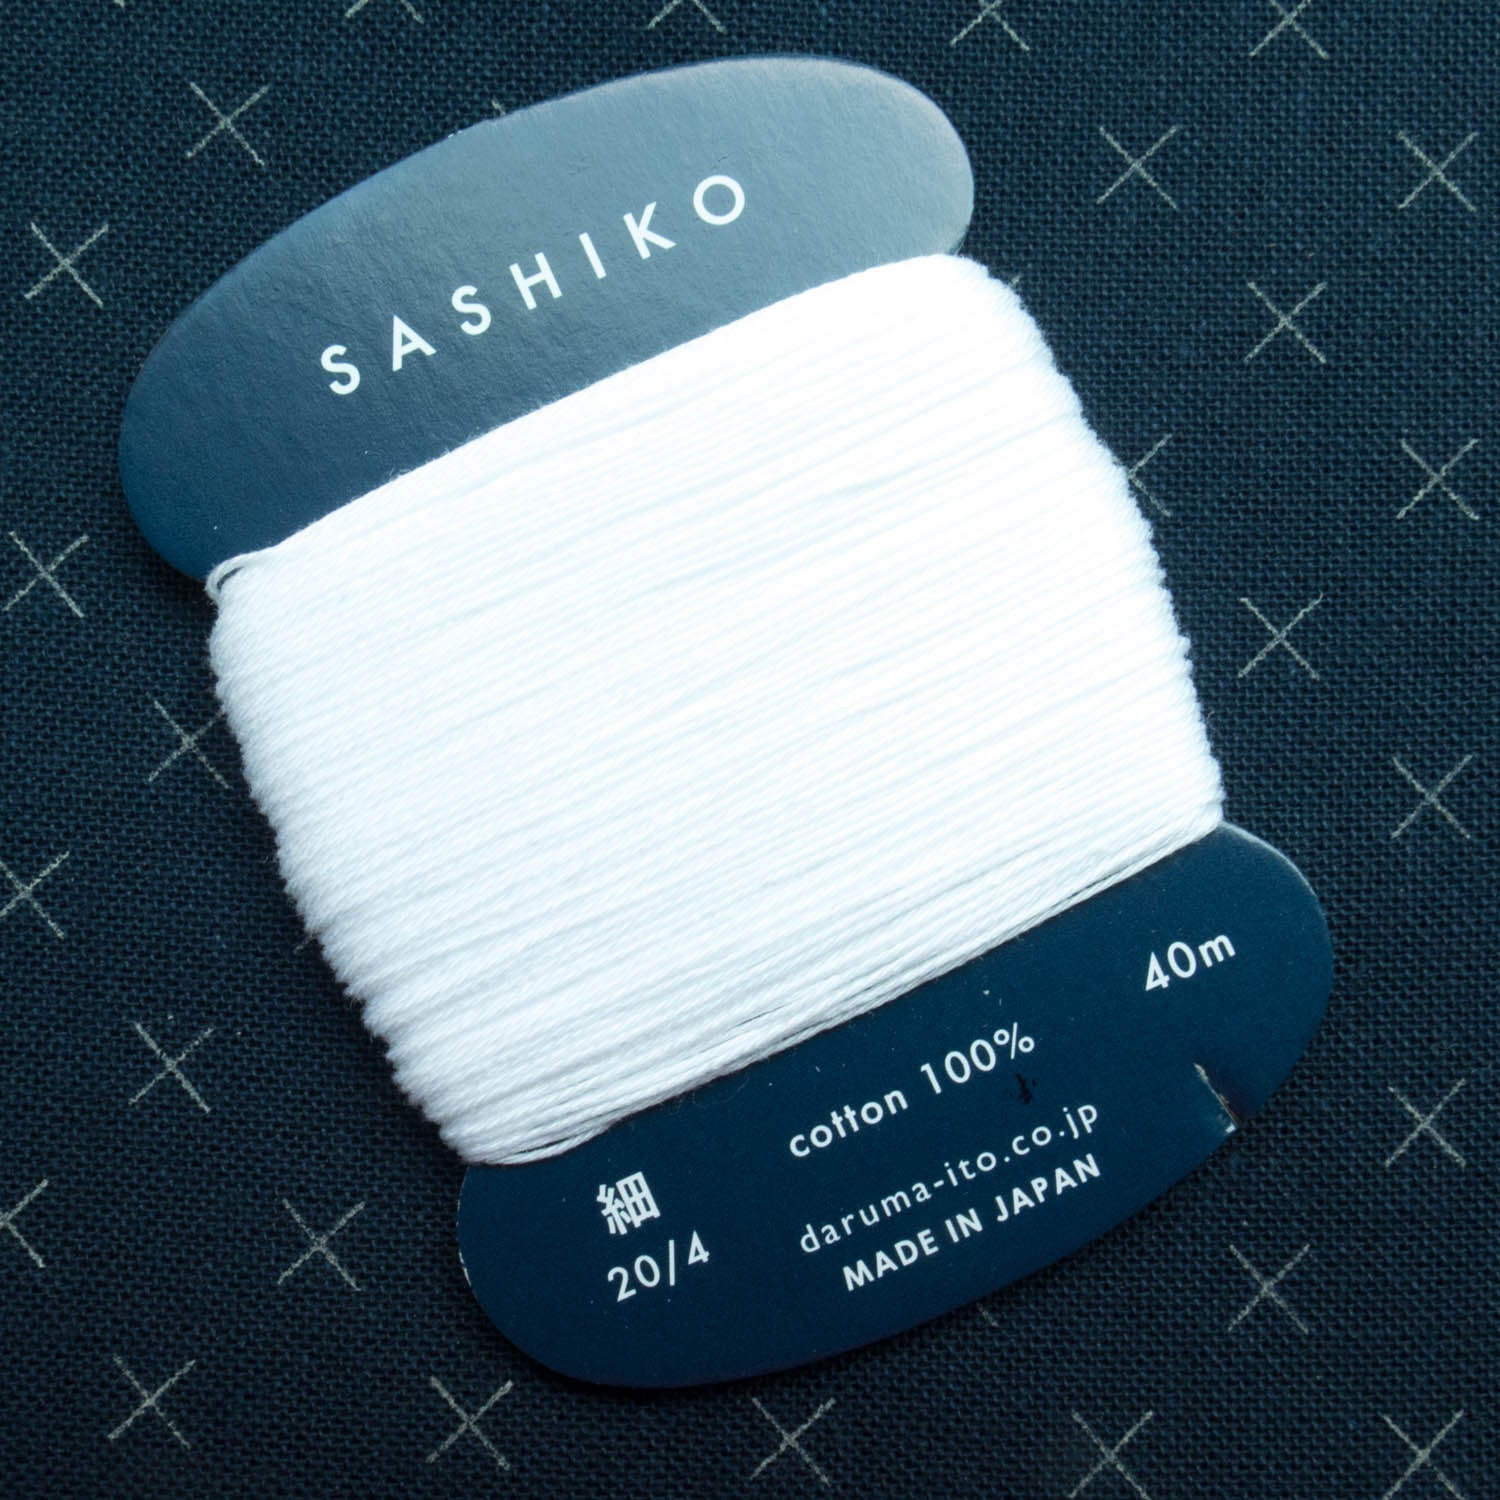 ORIM - Daruma - Sashiko Cotton Thread 20/6 - 0201 - White